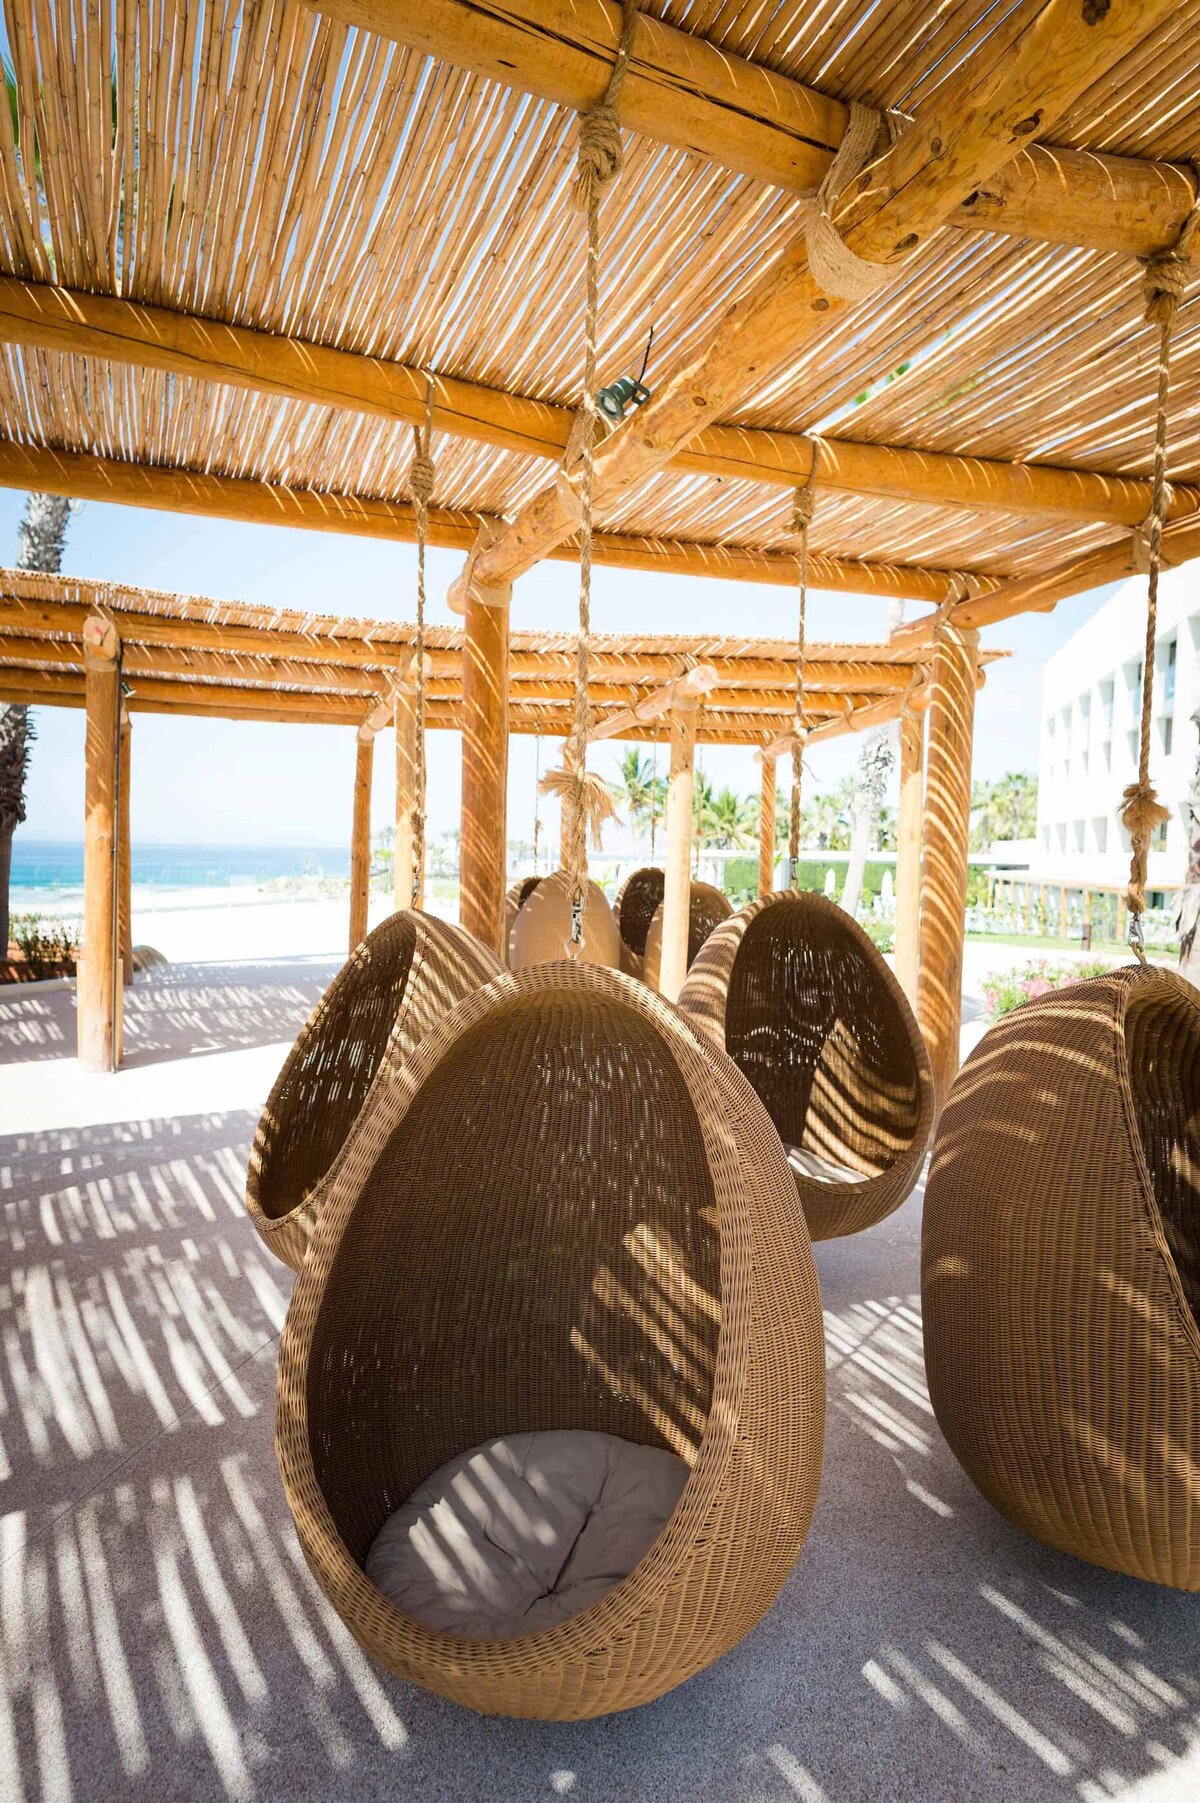 Basket Swings hang to offer relaxation at Mauna Lani Resort